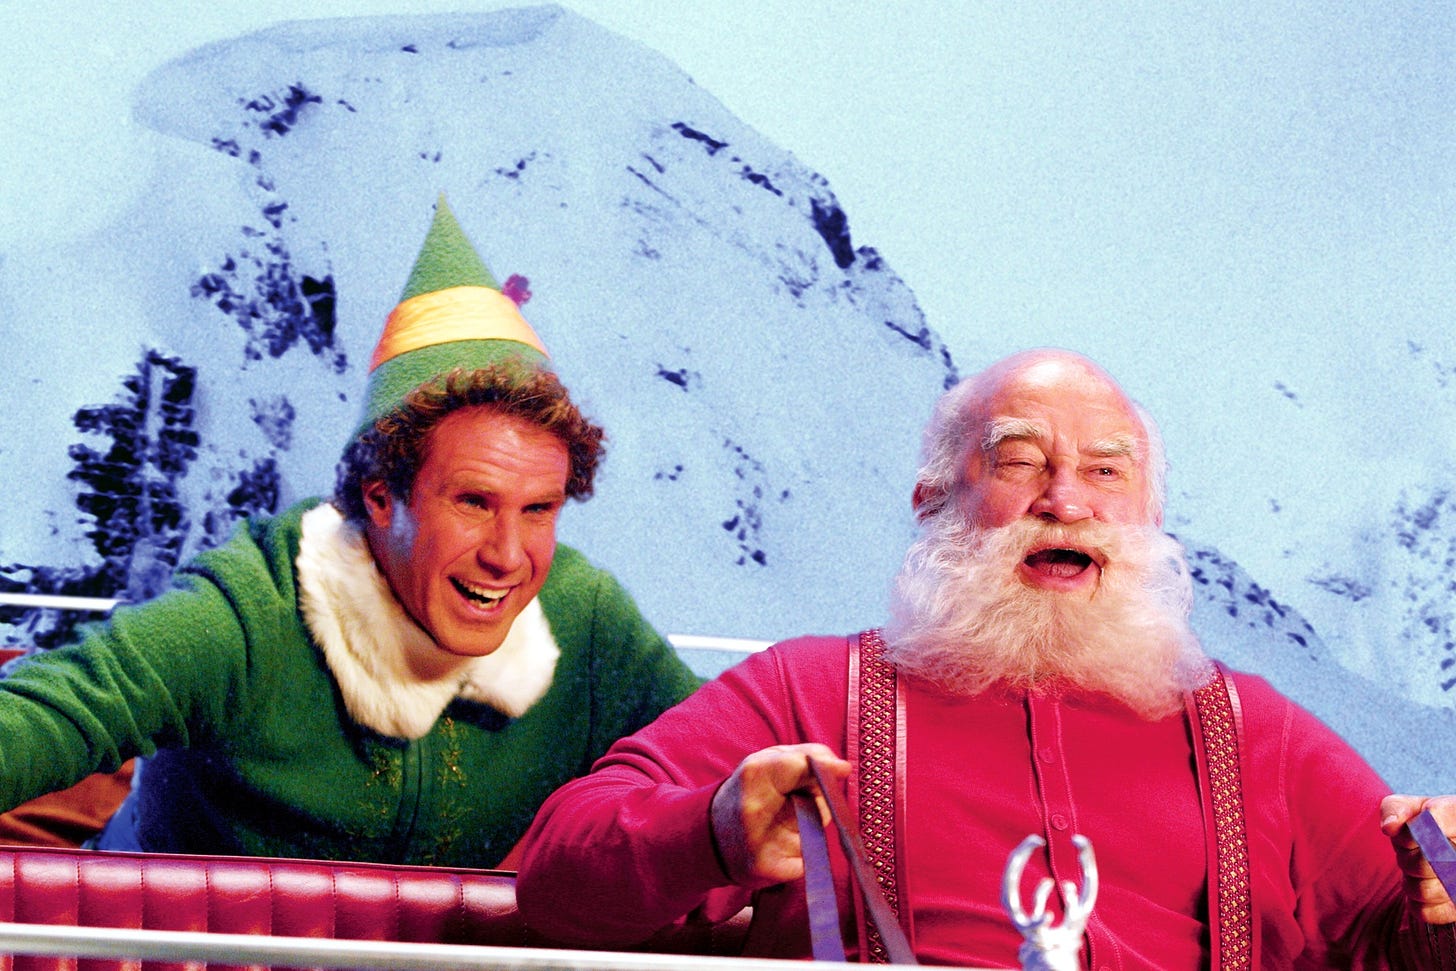 Buddy the elf and Santa in Elf